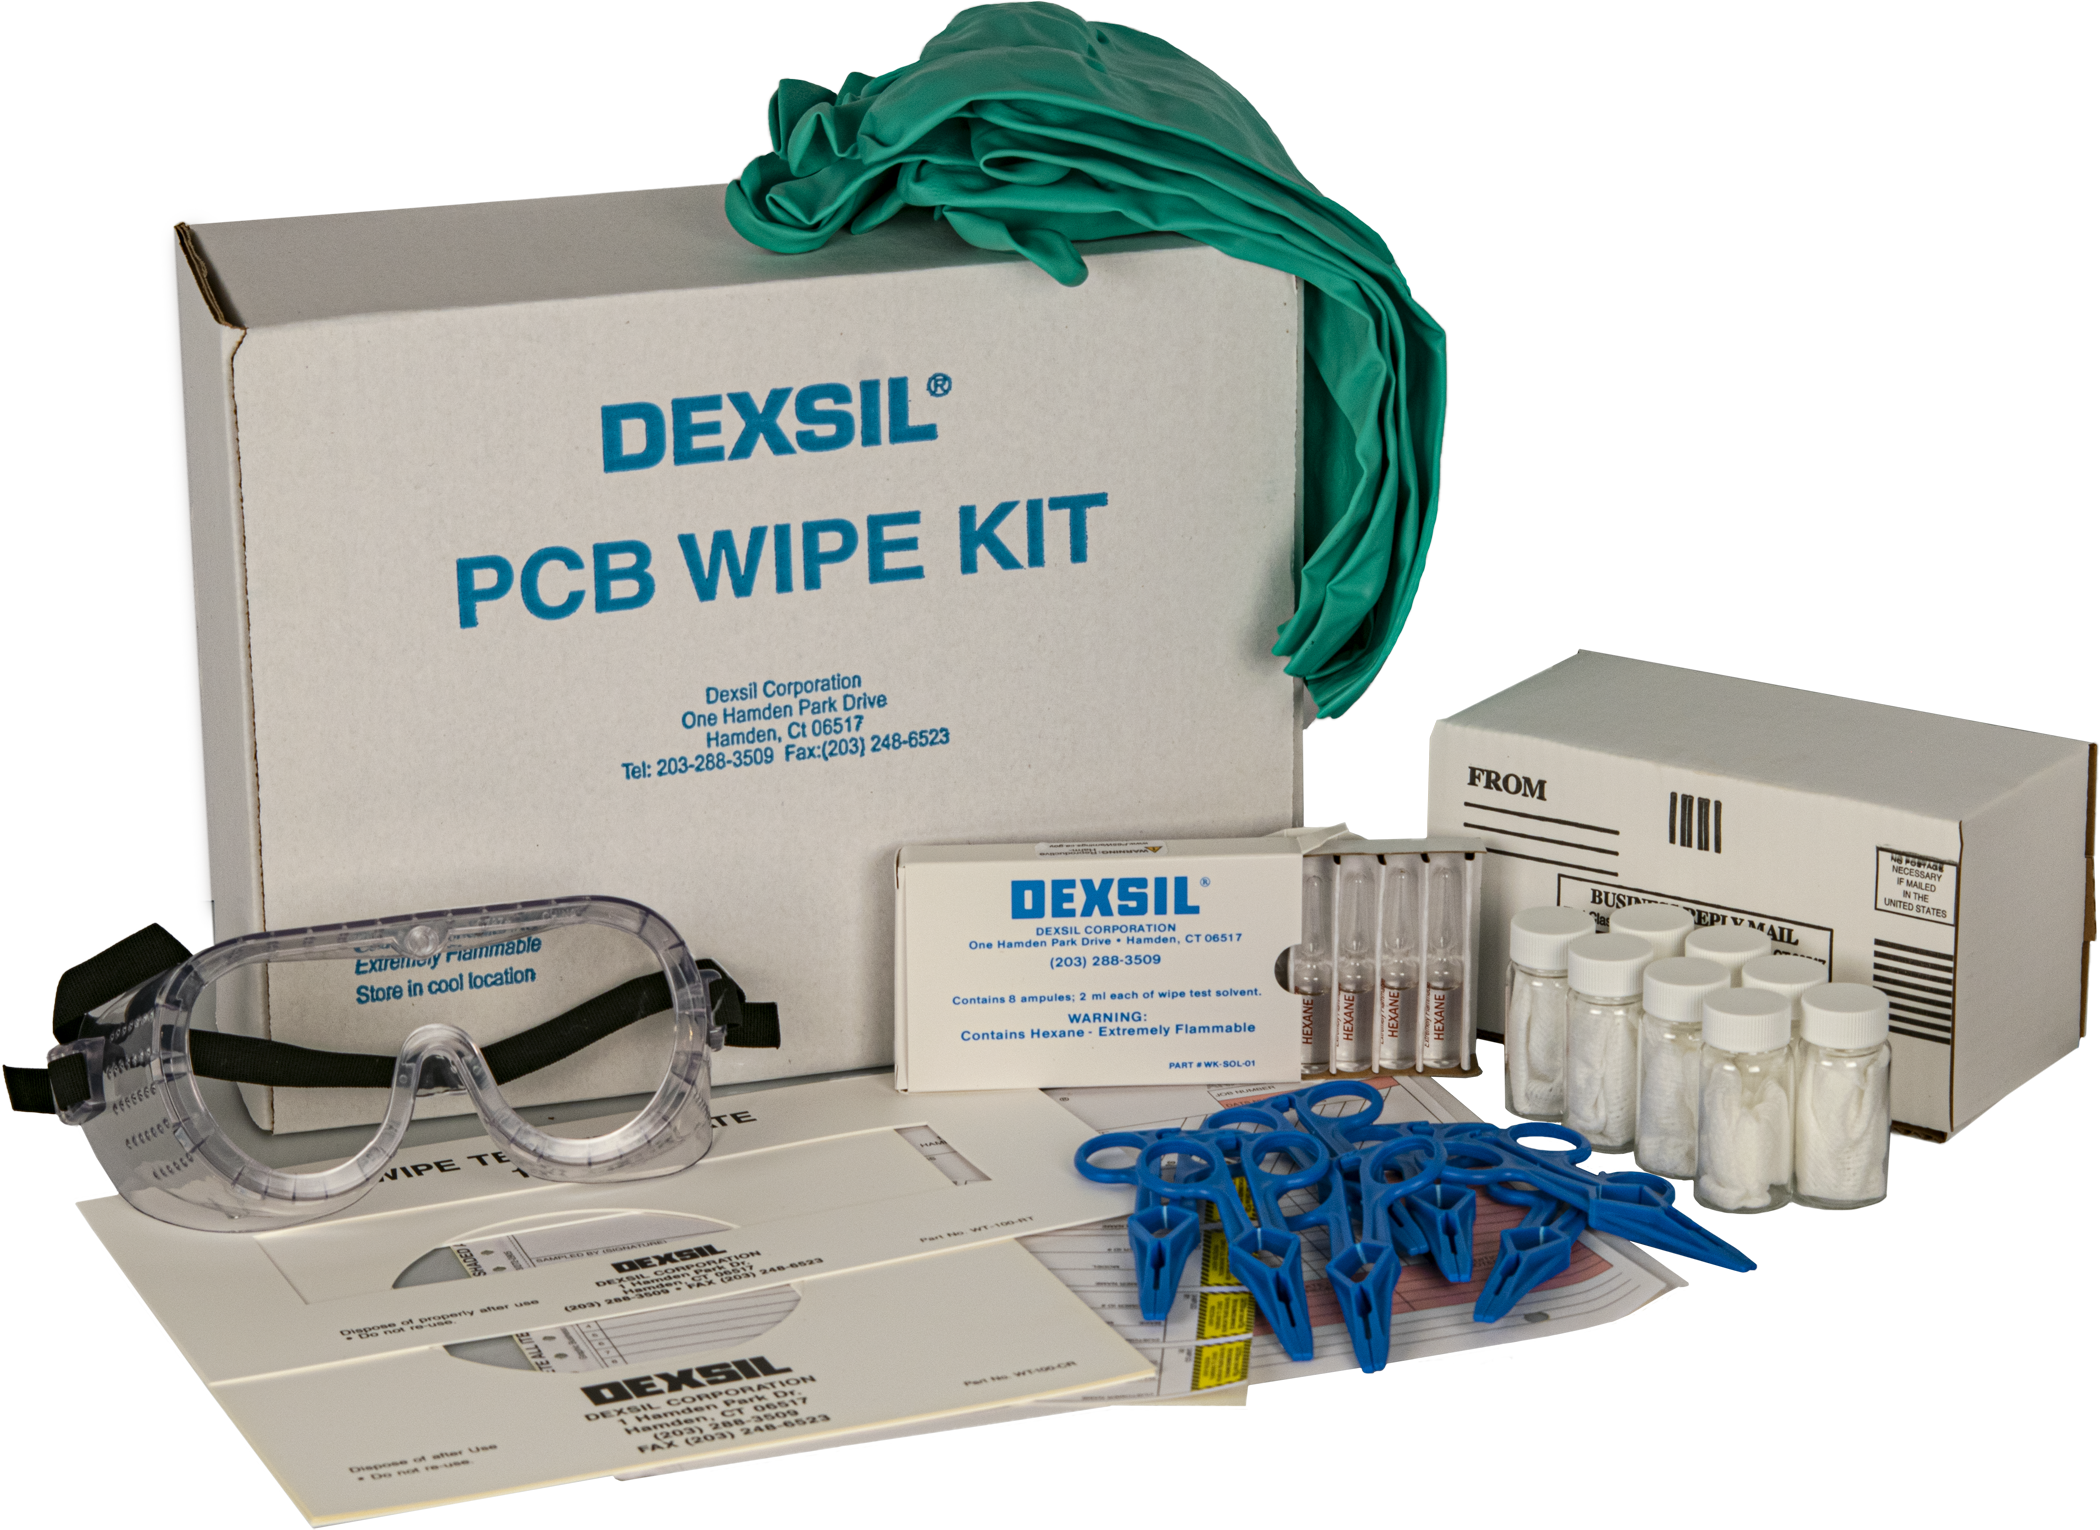 PCB Wipe Sampling Kit - Dexsil